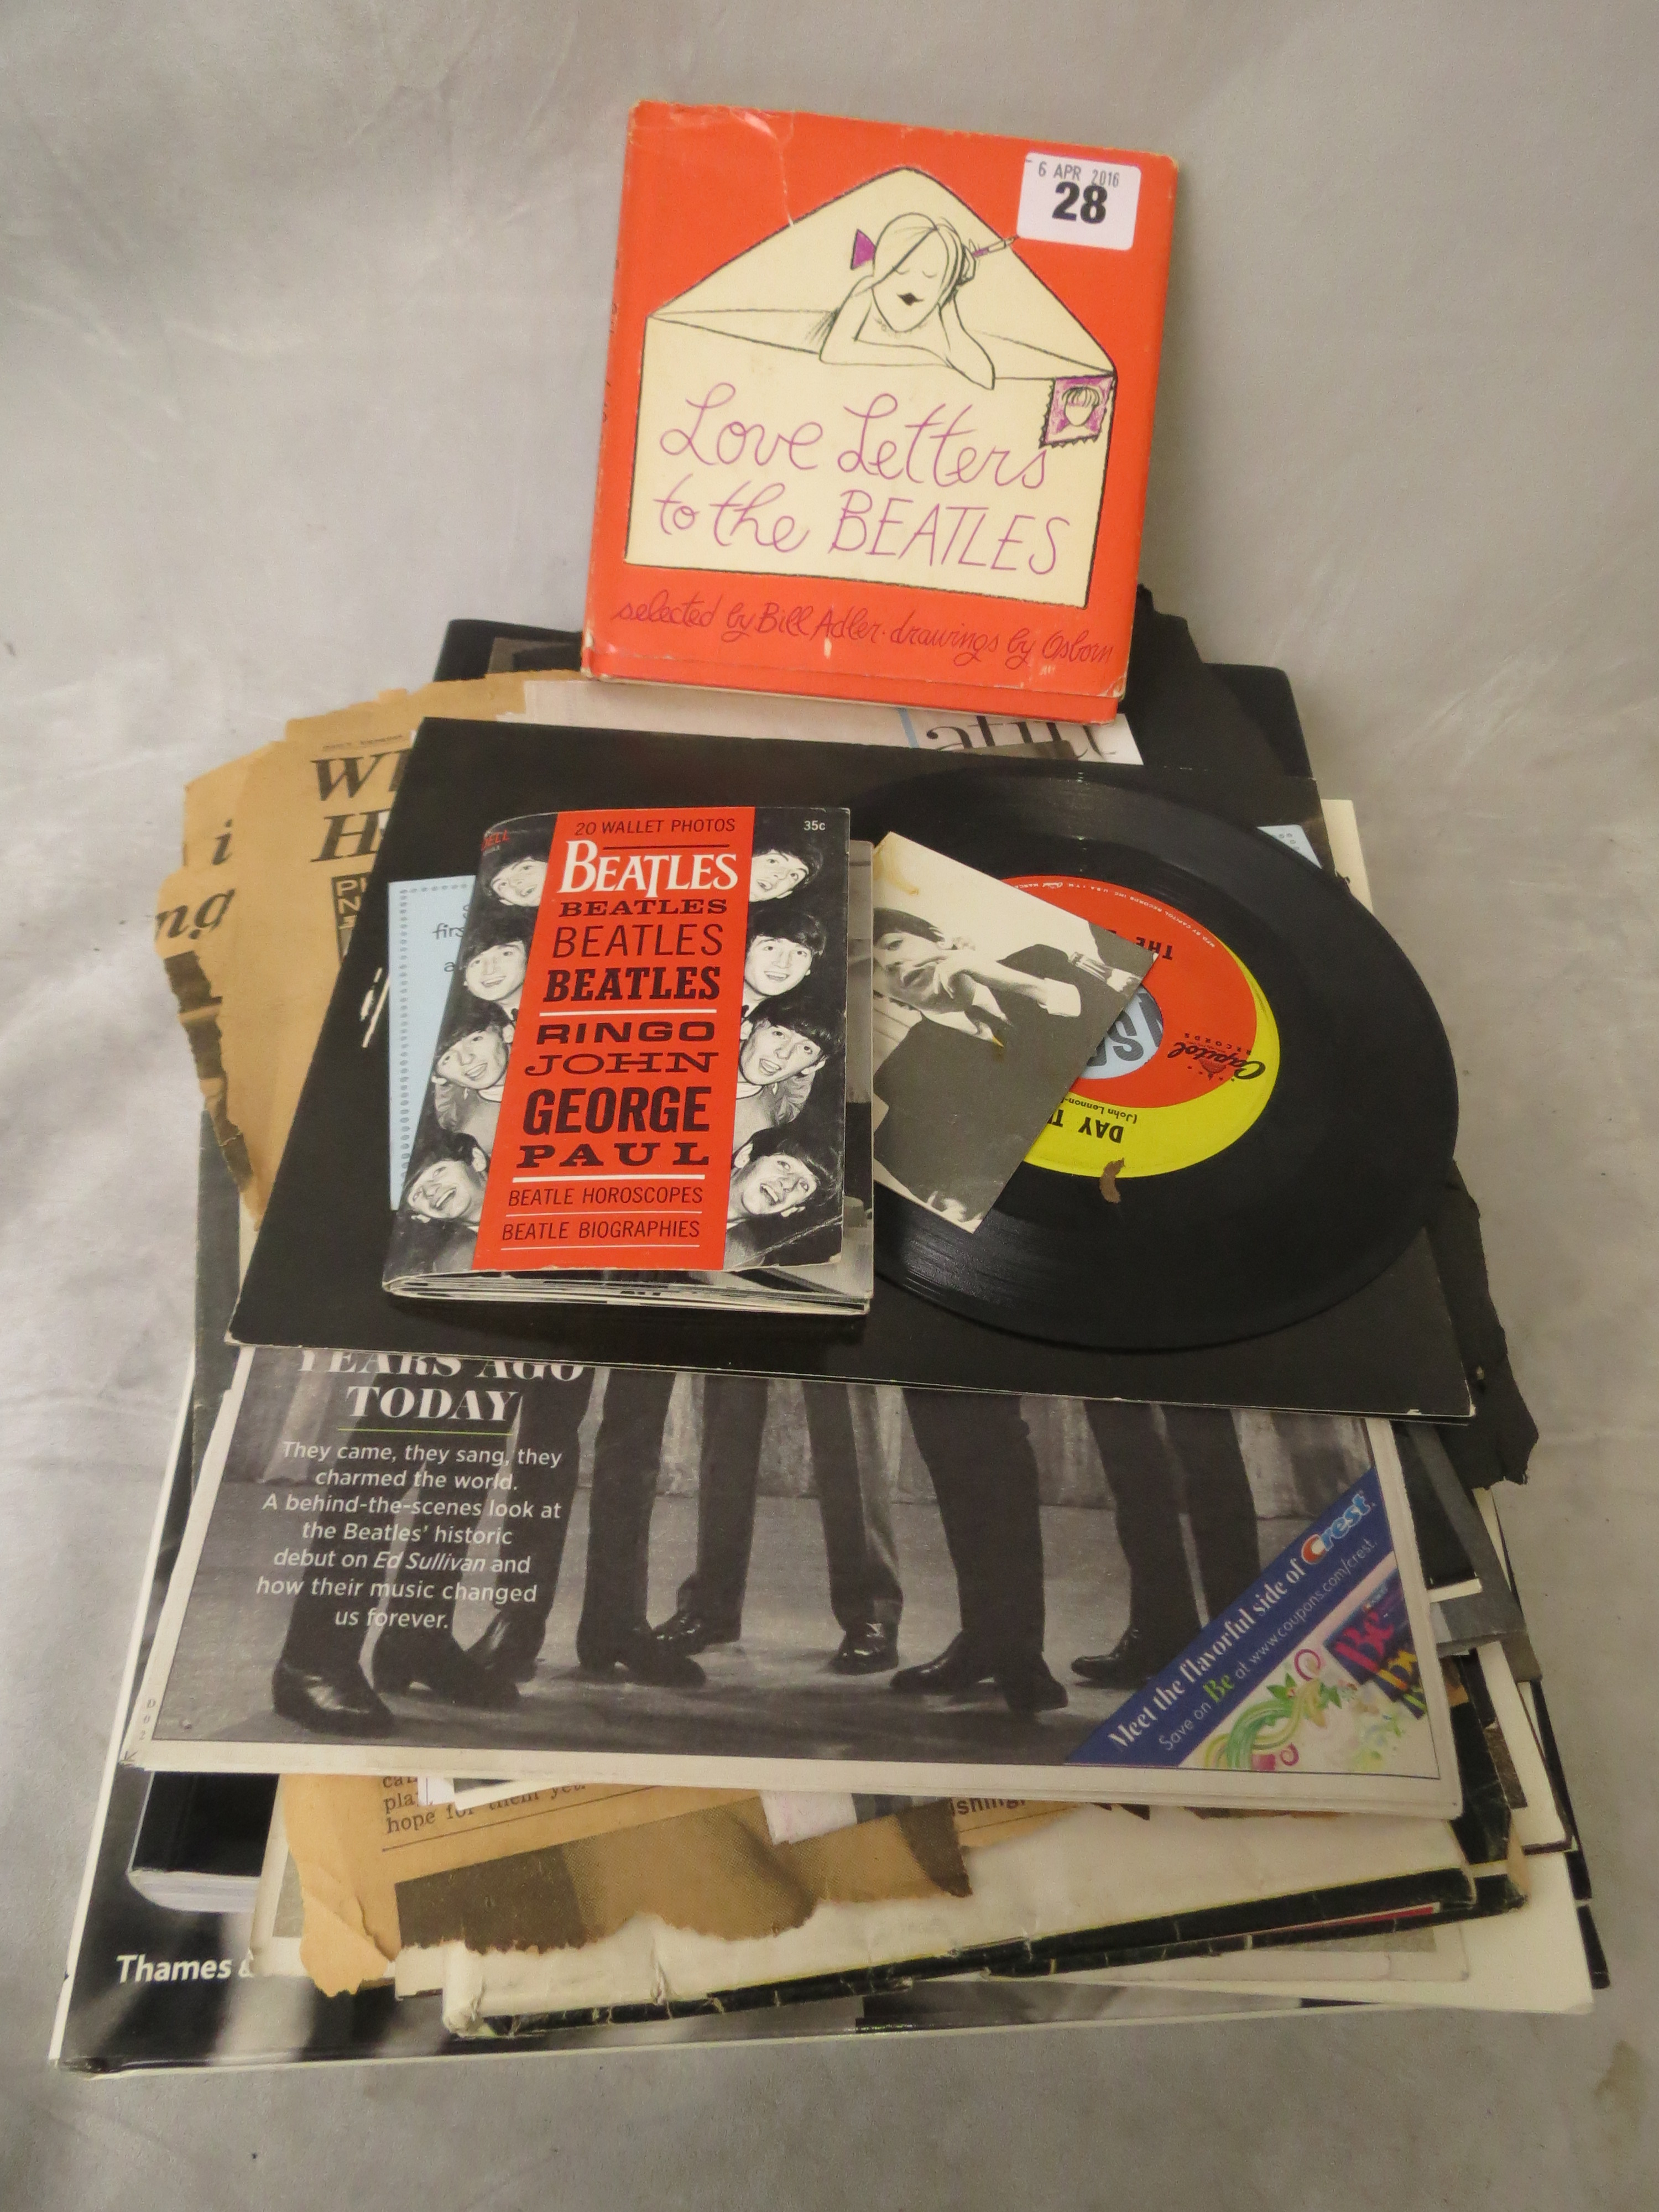 Period Beatles memorabilia to include a studio photograph of Ringo Star signed in orange pen, 'To